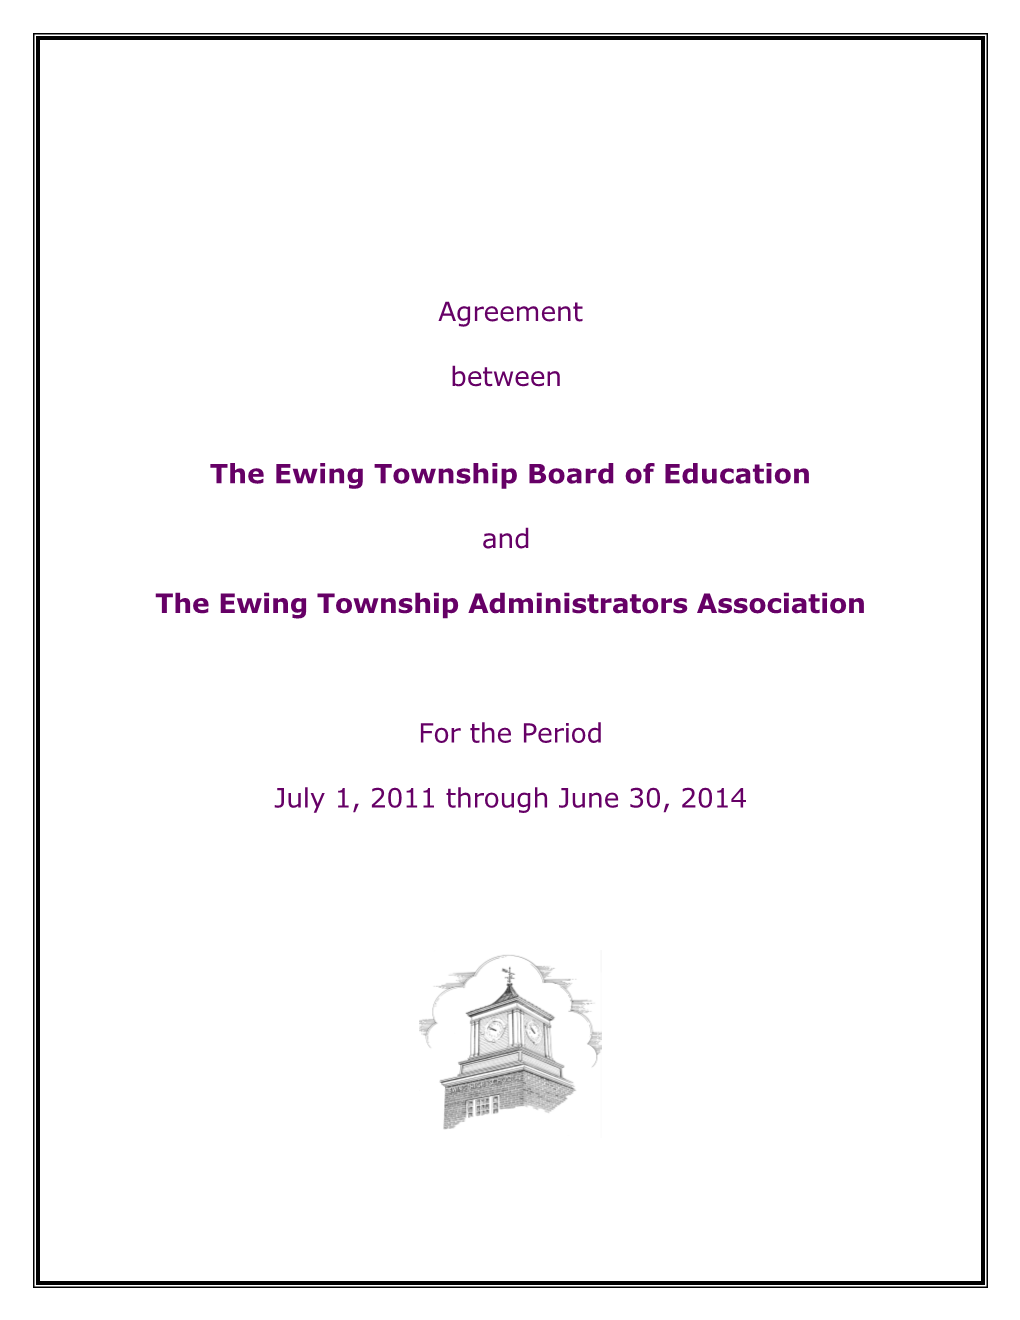 The Ewingtownship Board of Education